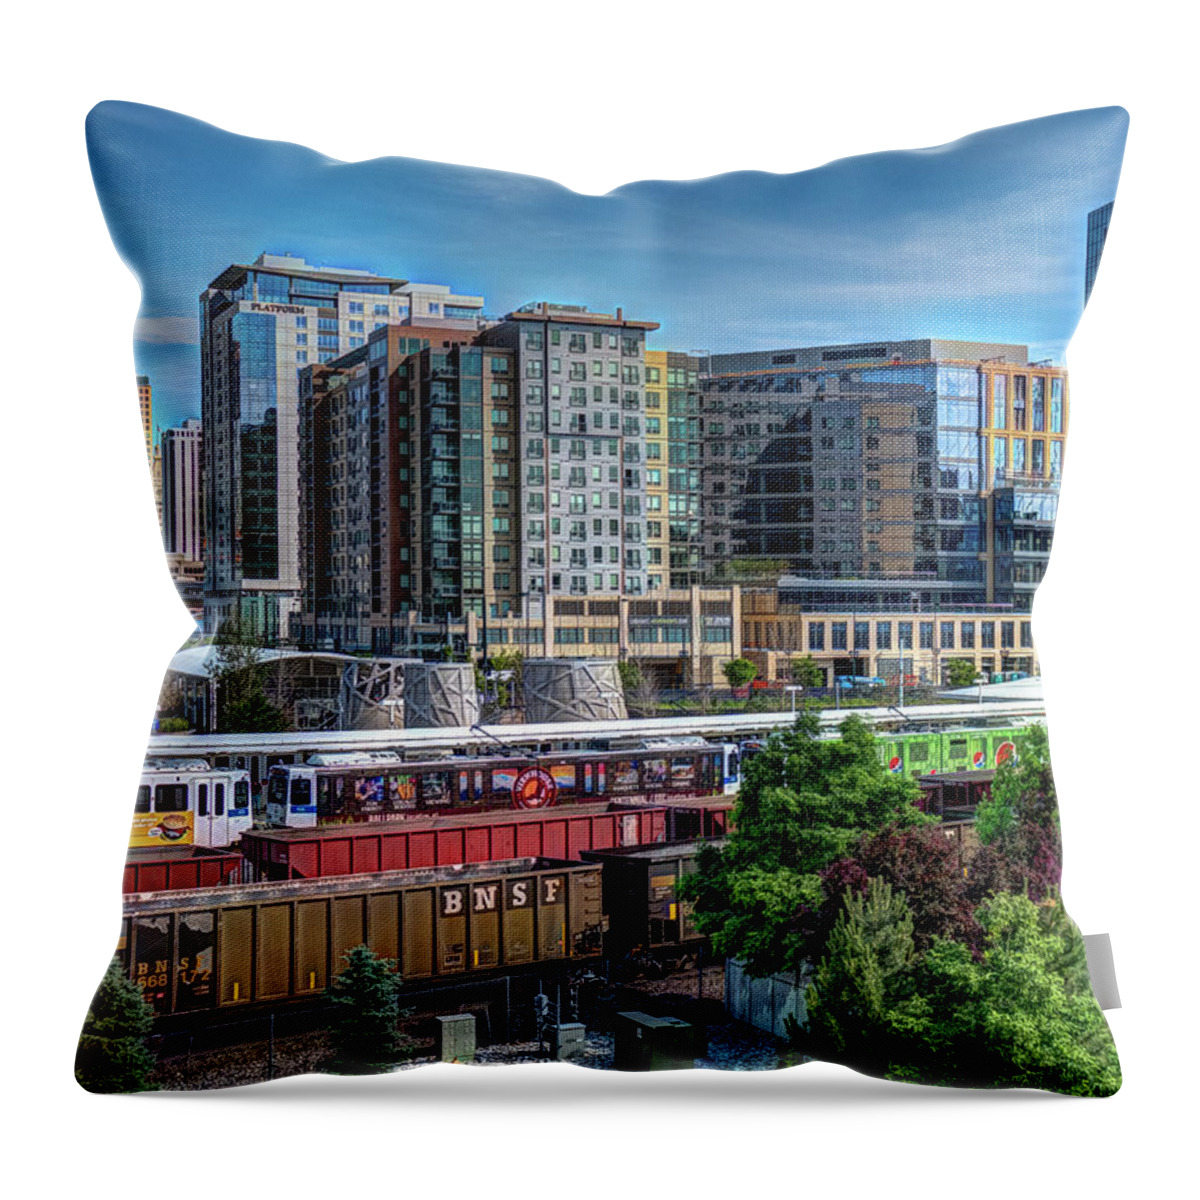 Colorado Throw Pillow featuring the photograph Denver Train Station by David Thompsen